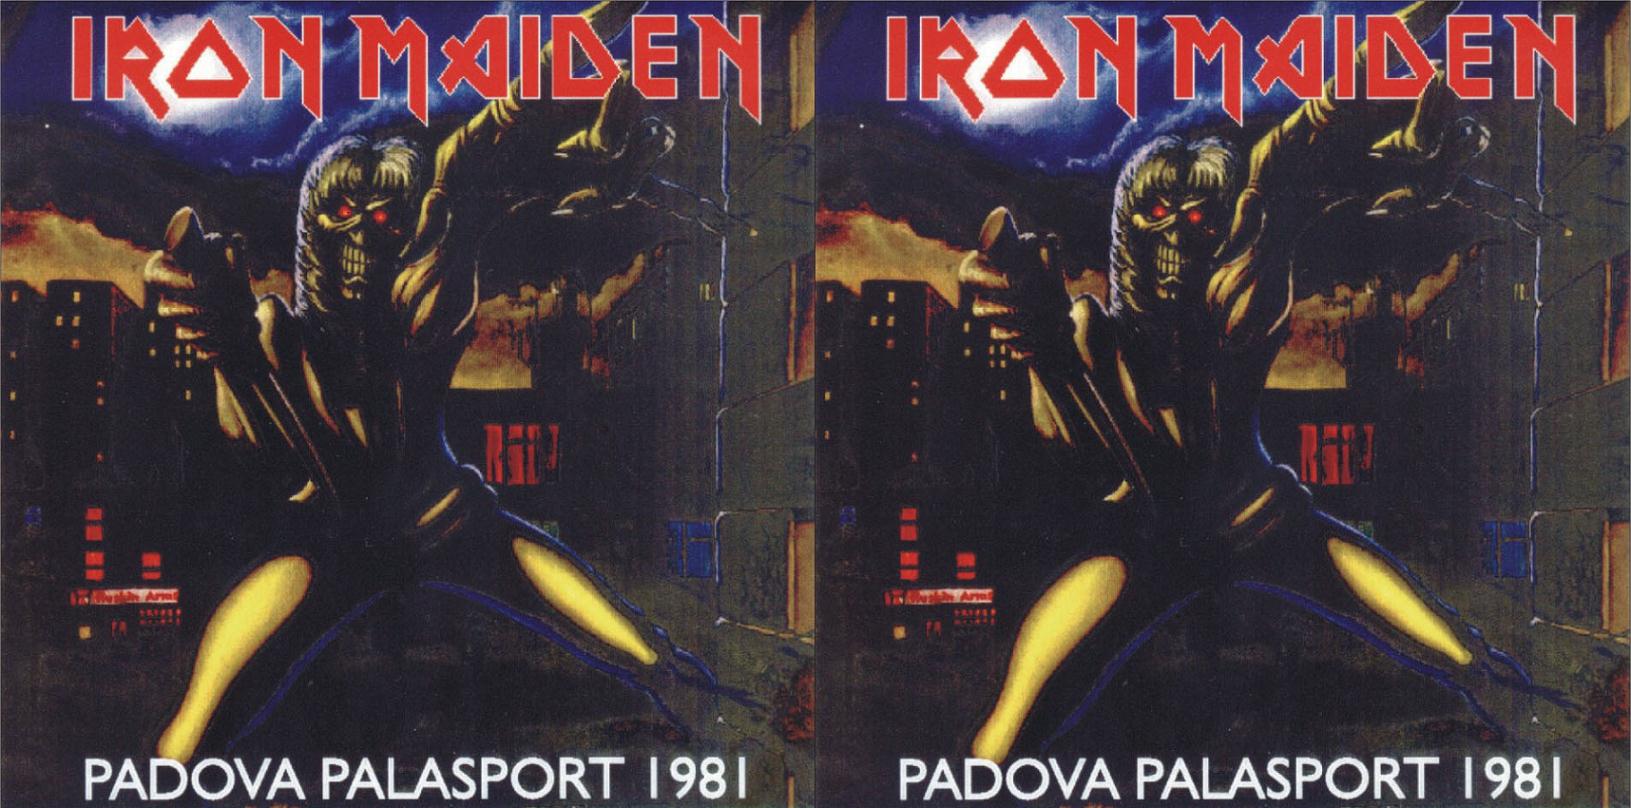 1981-10-29-Padova_Palasport_1981-front